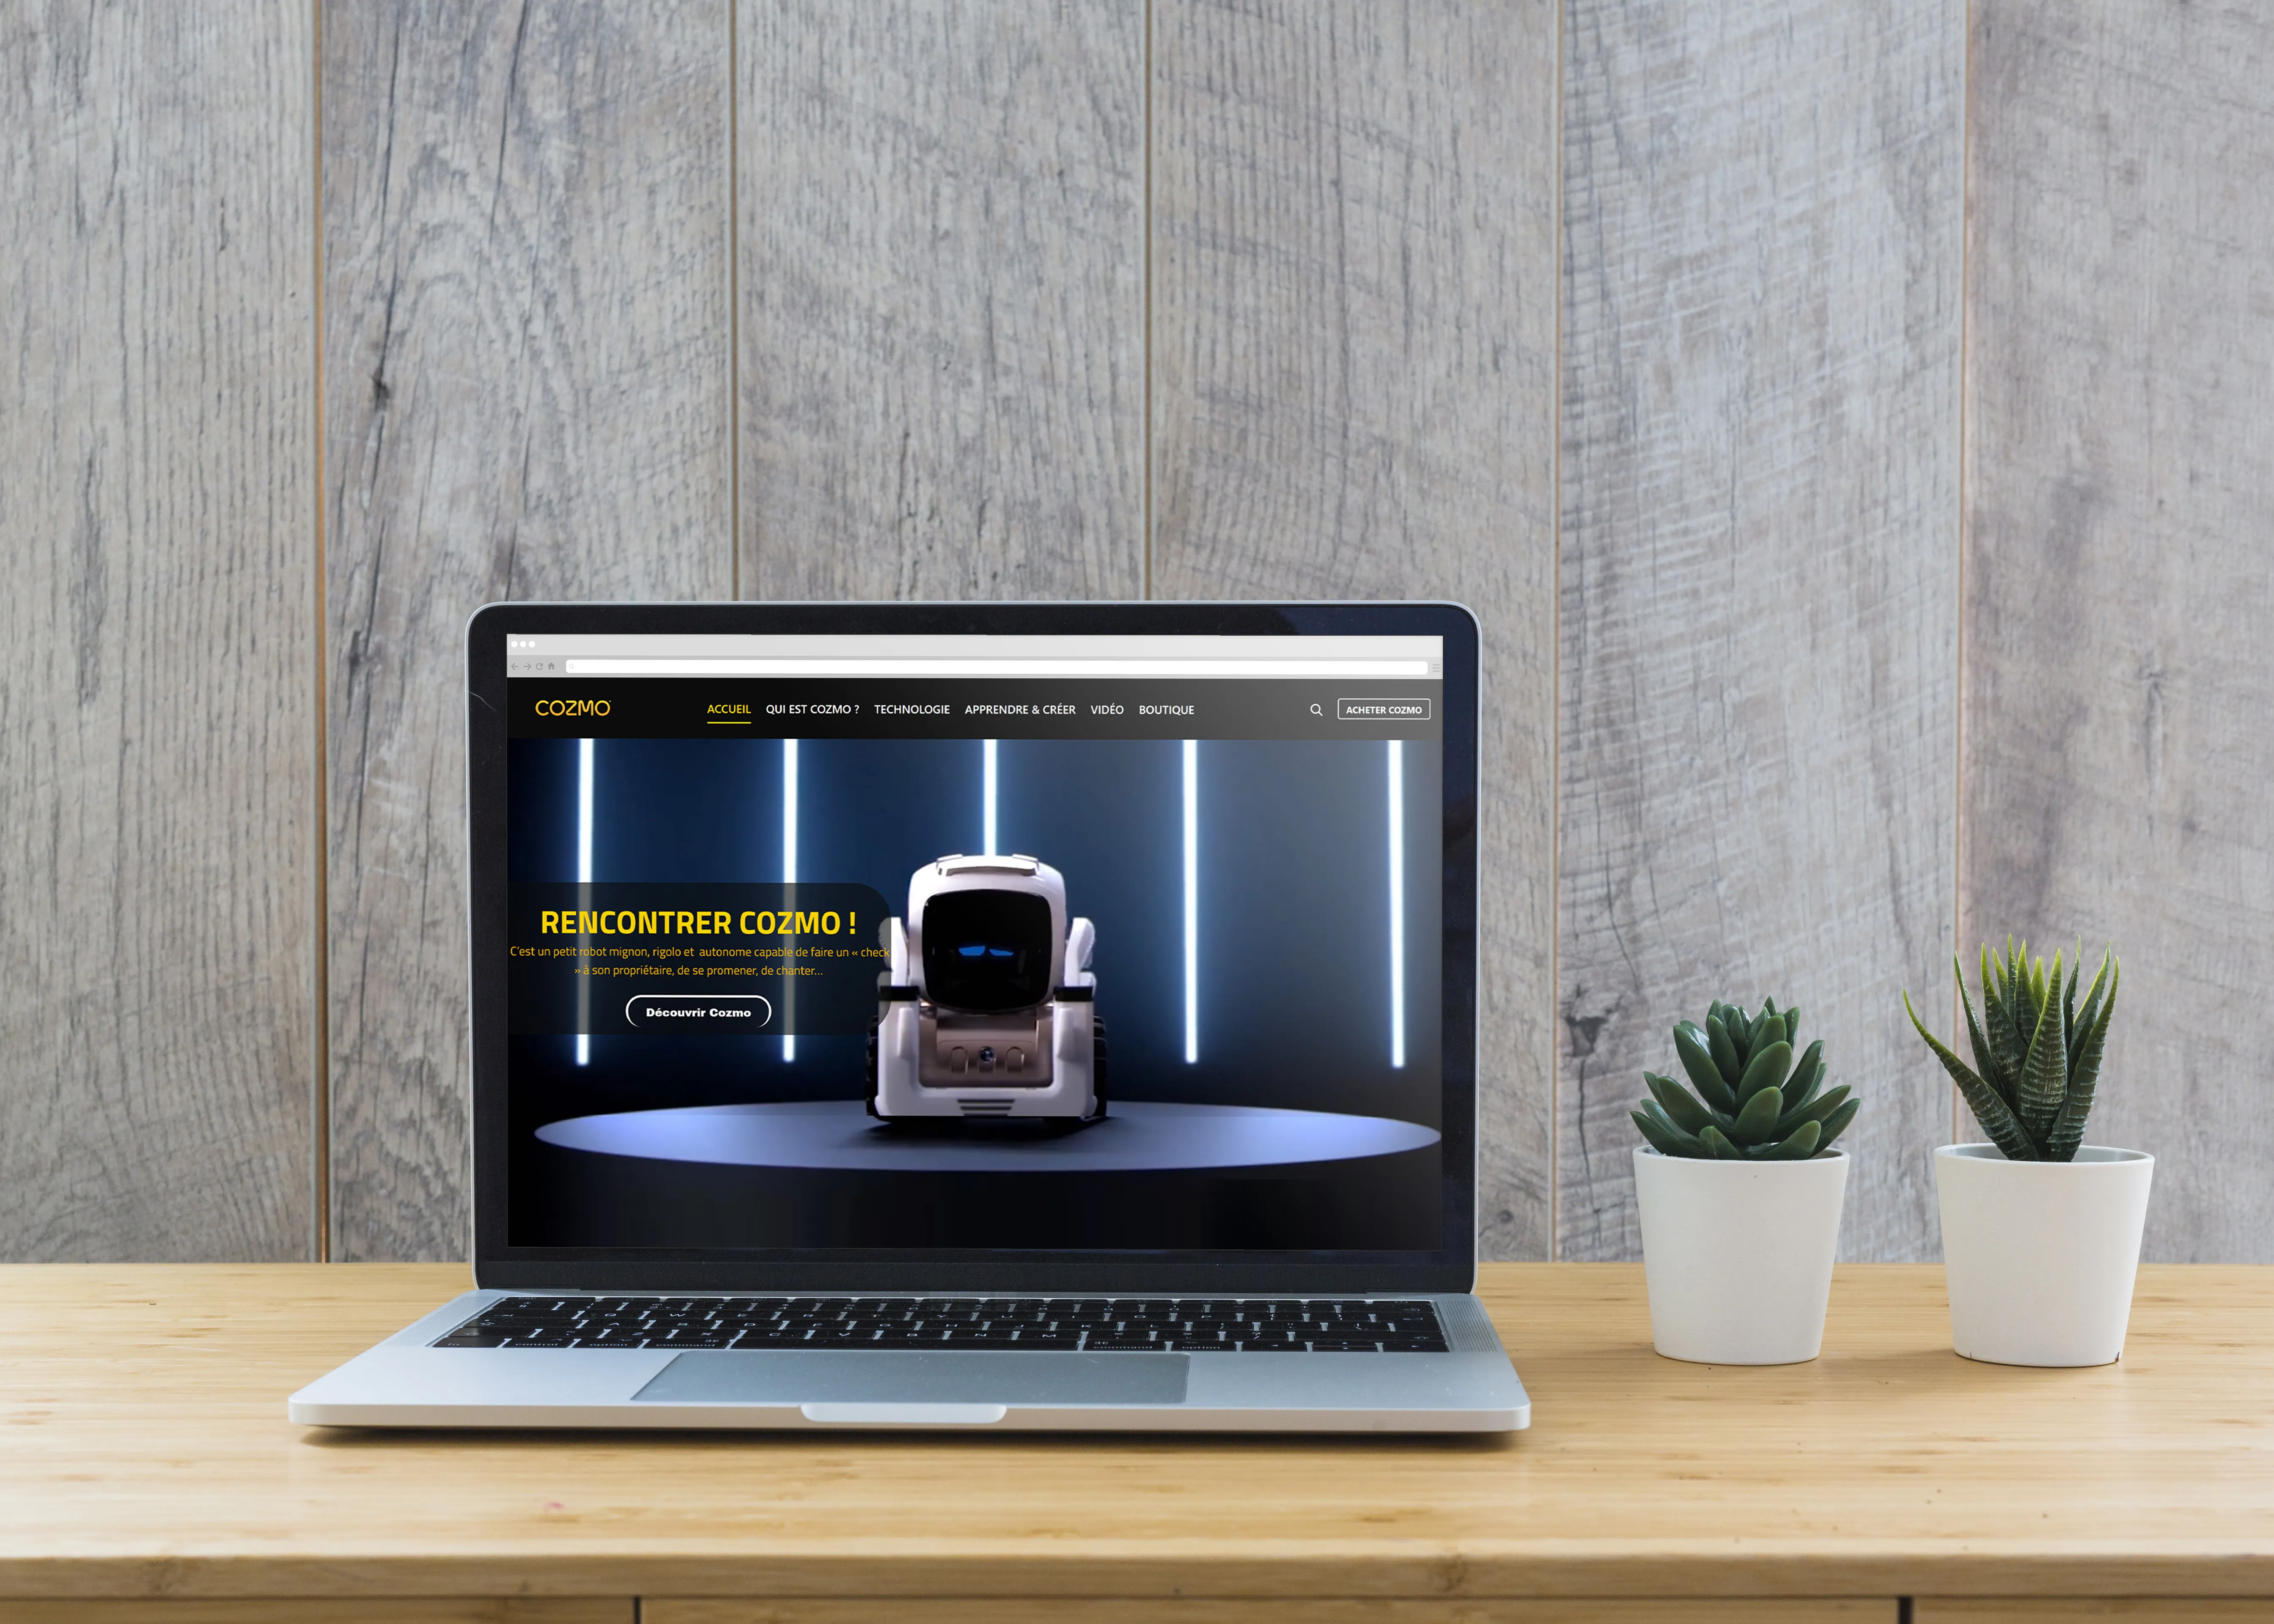 Image vitrine du projet webdesign du robot Cozmo